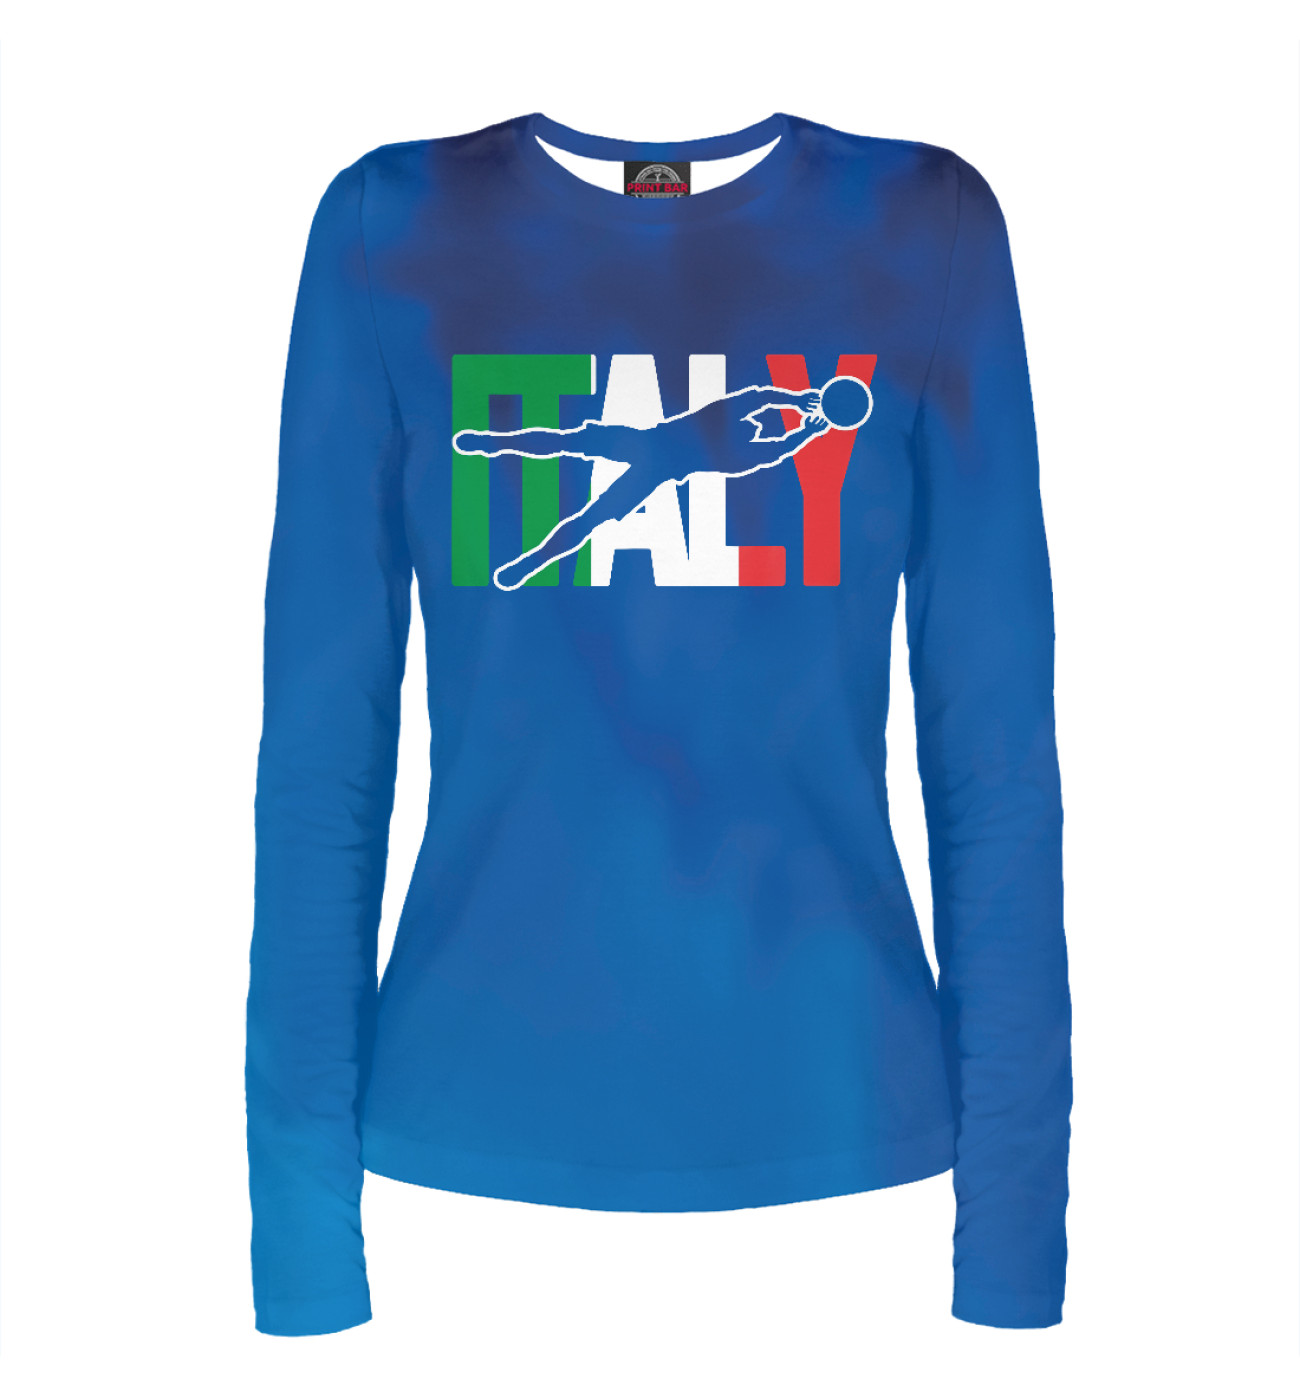 Женский Лонгслив Italy Soccer, артикул: FTO-958717-lon-1